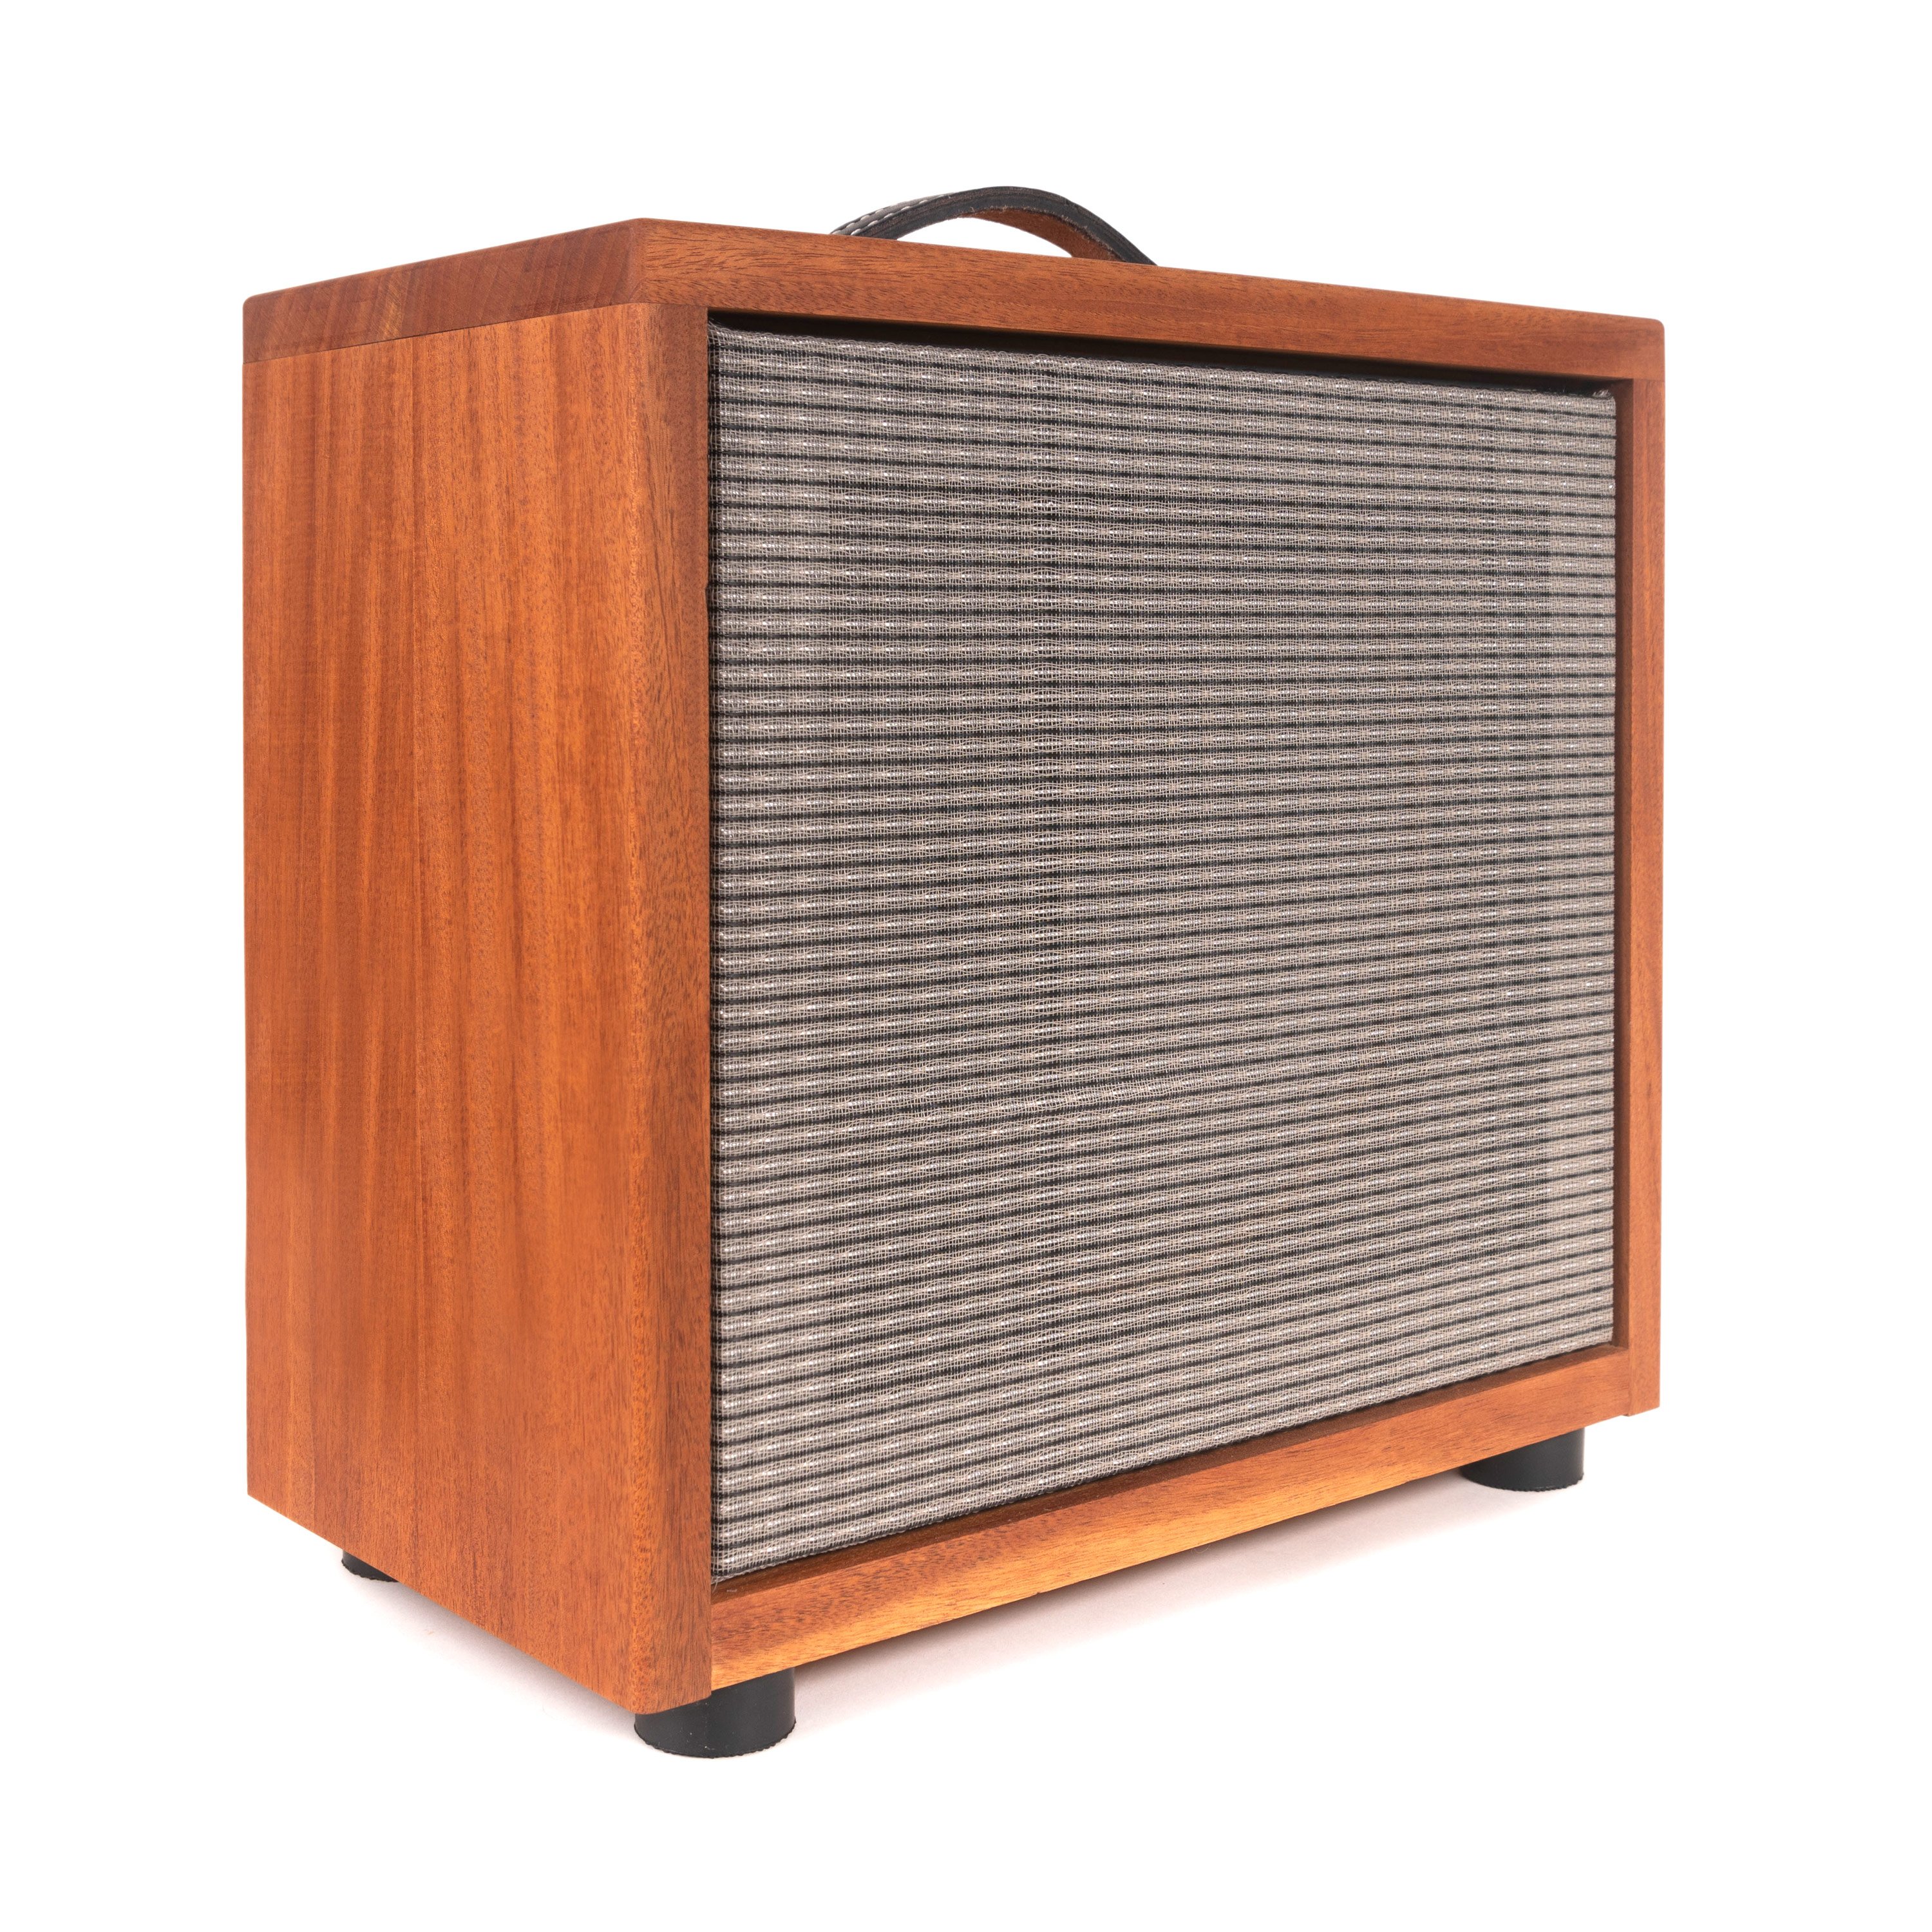 Premium Mahogany Tonewood Speaker Cabinet Kit